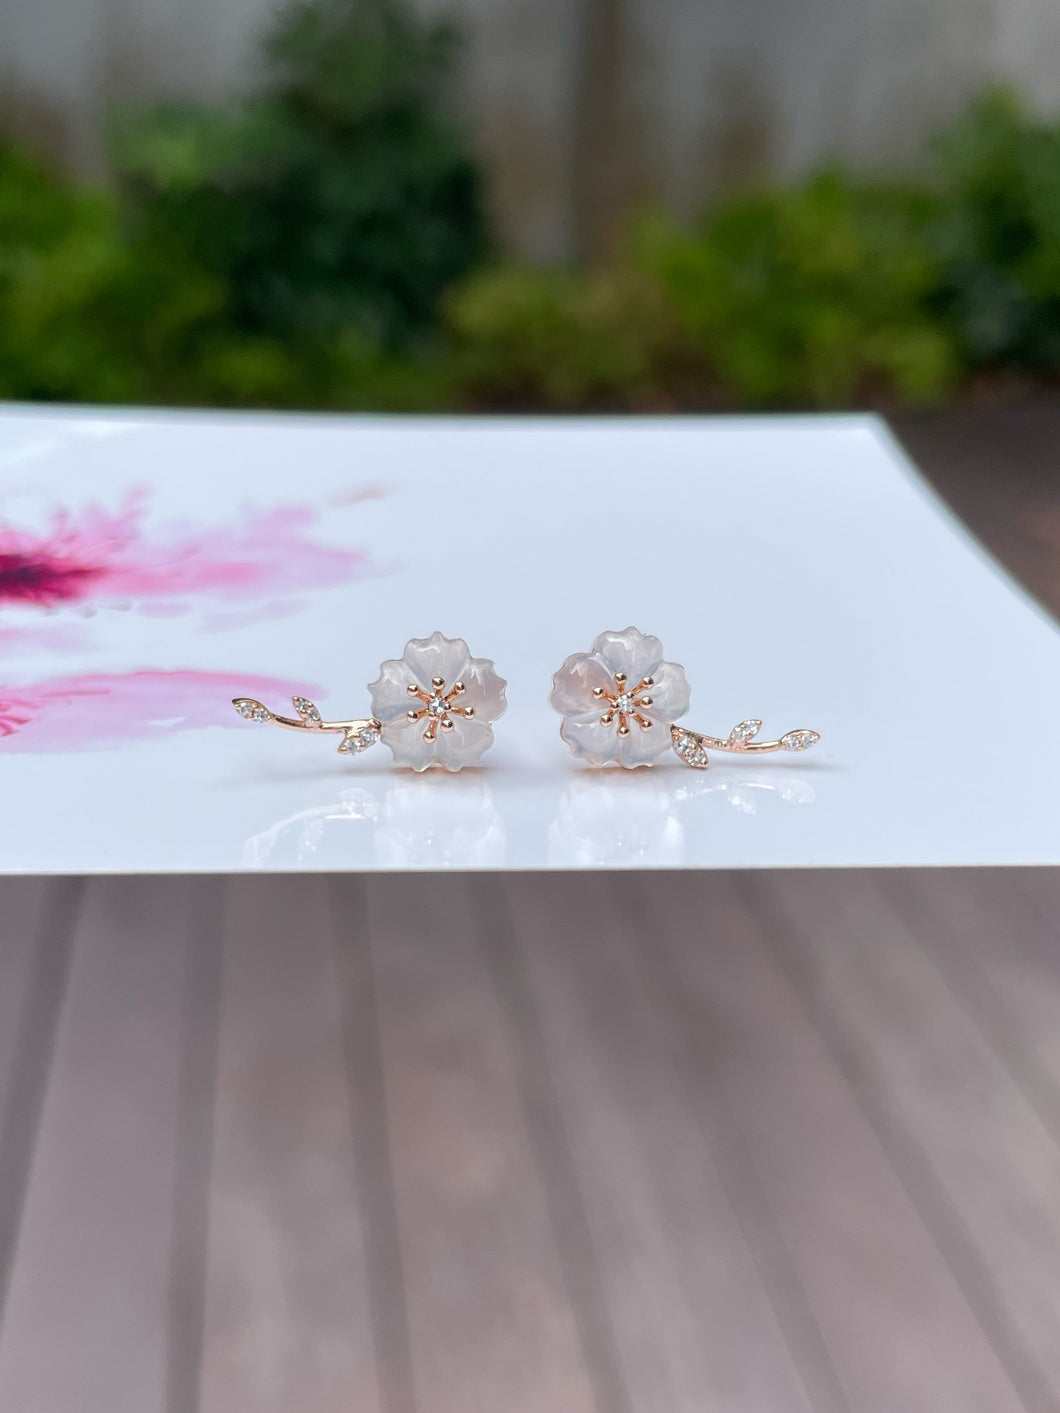 Icy Carved Jade Earrings - Plum Blossoms (NJE101)